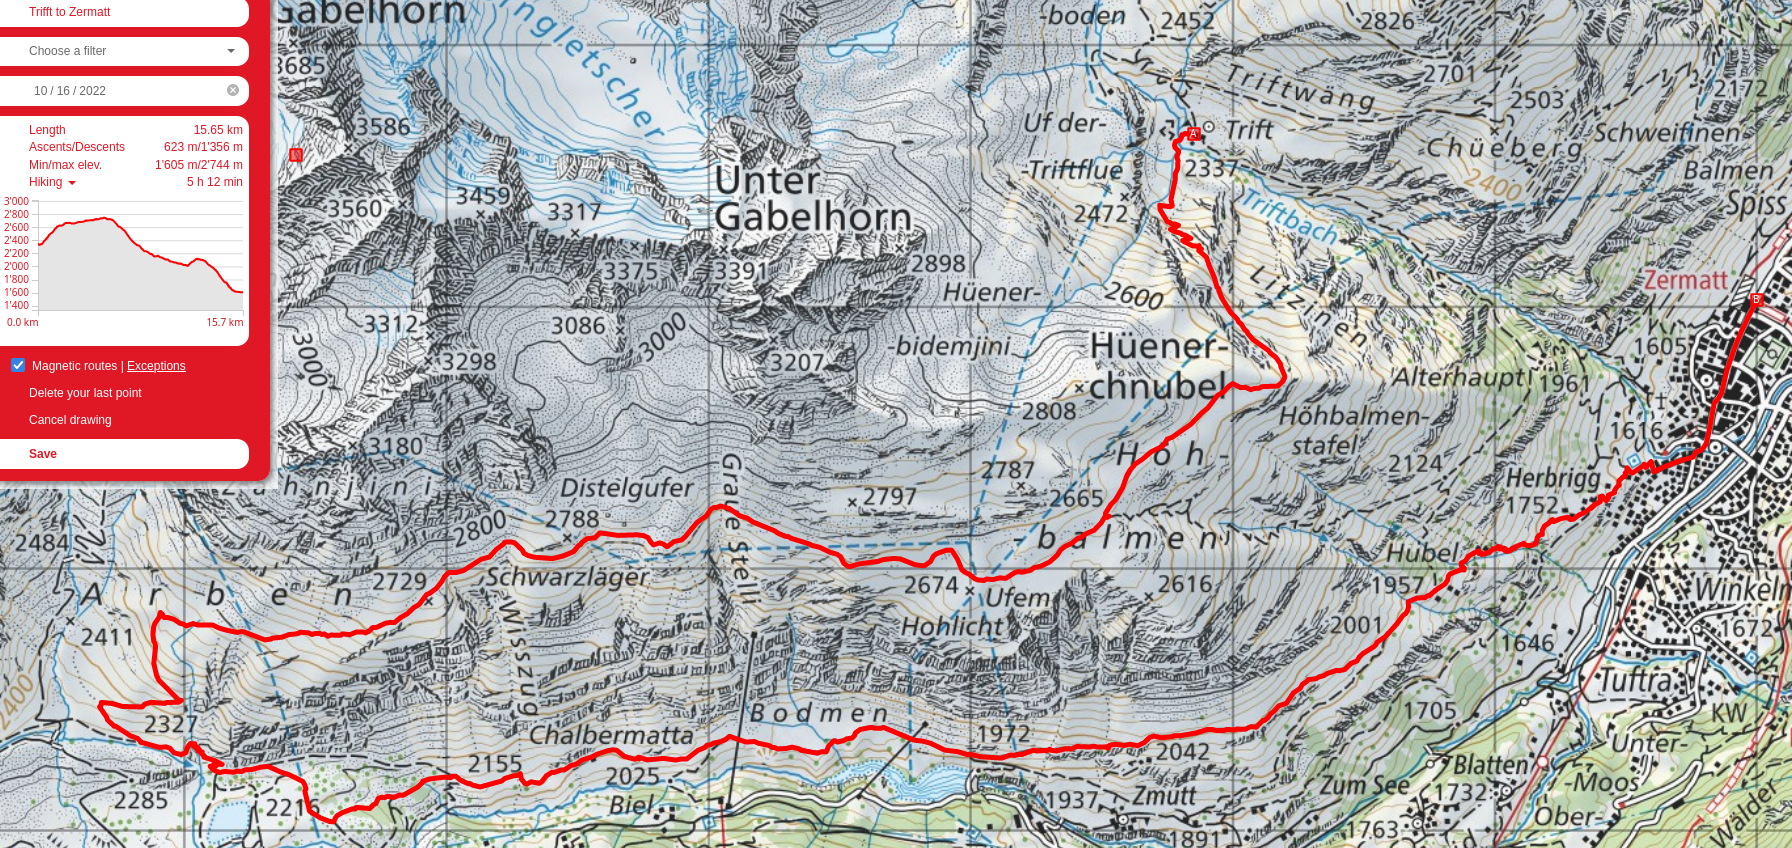 Berggasthaus Trift to Zermatt route map